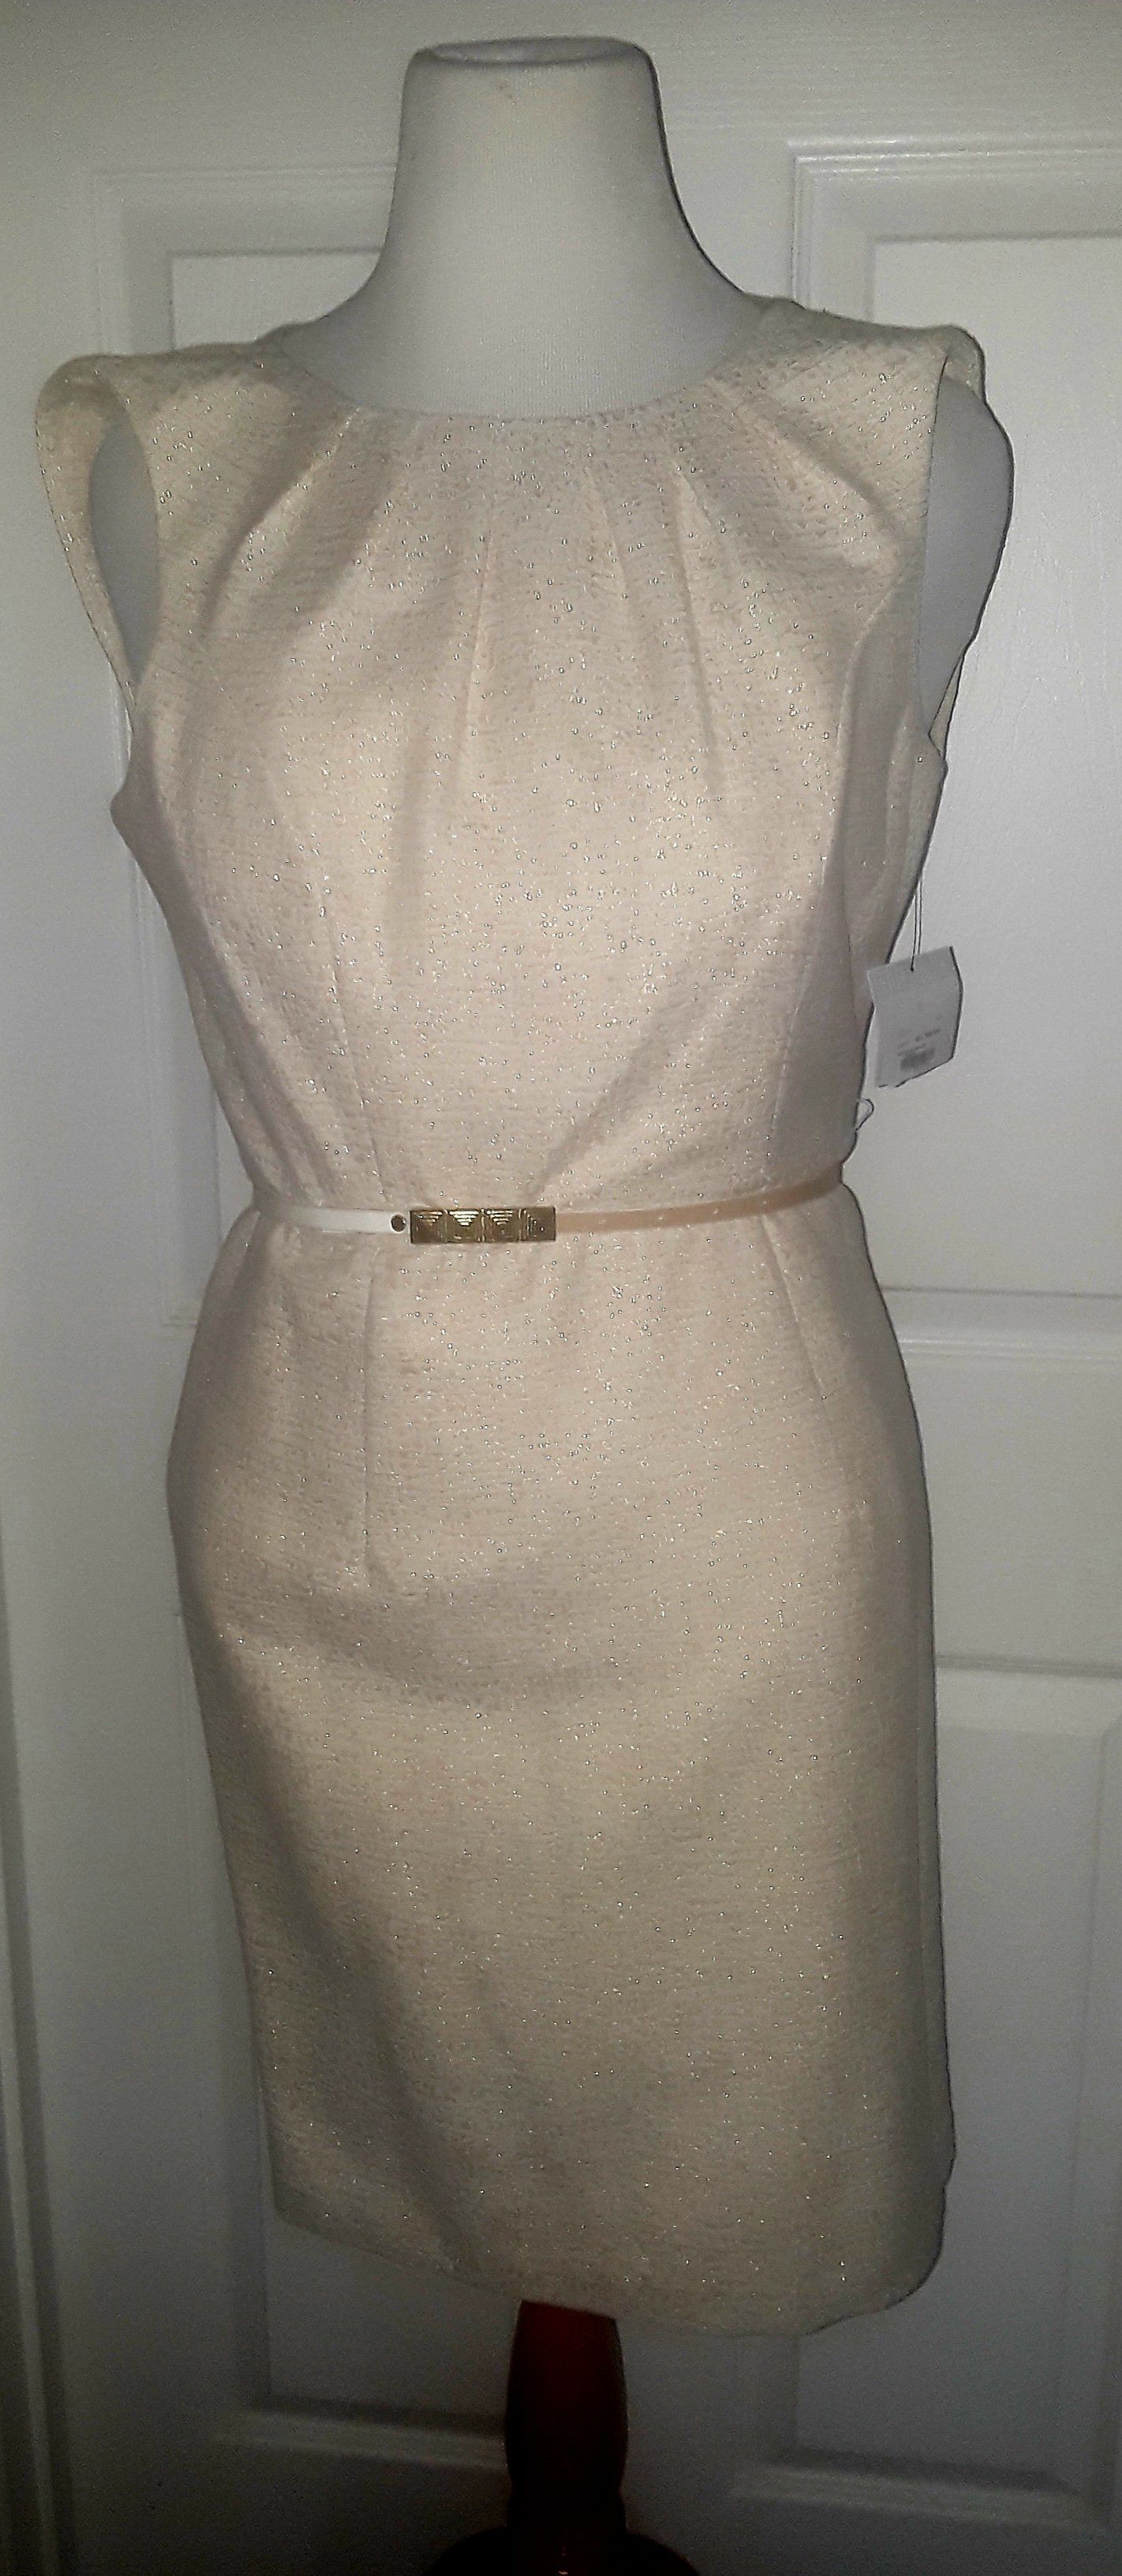 New Liz claiborne off white Metallic dress size 8 PD $139